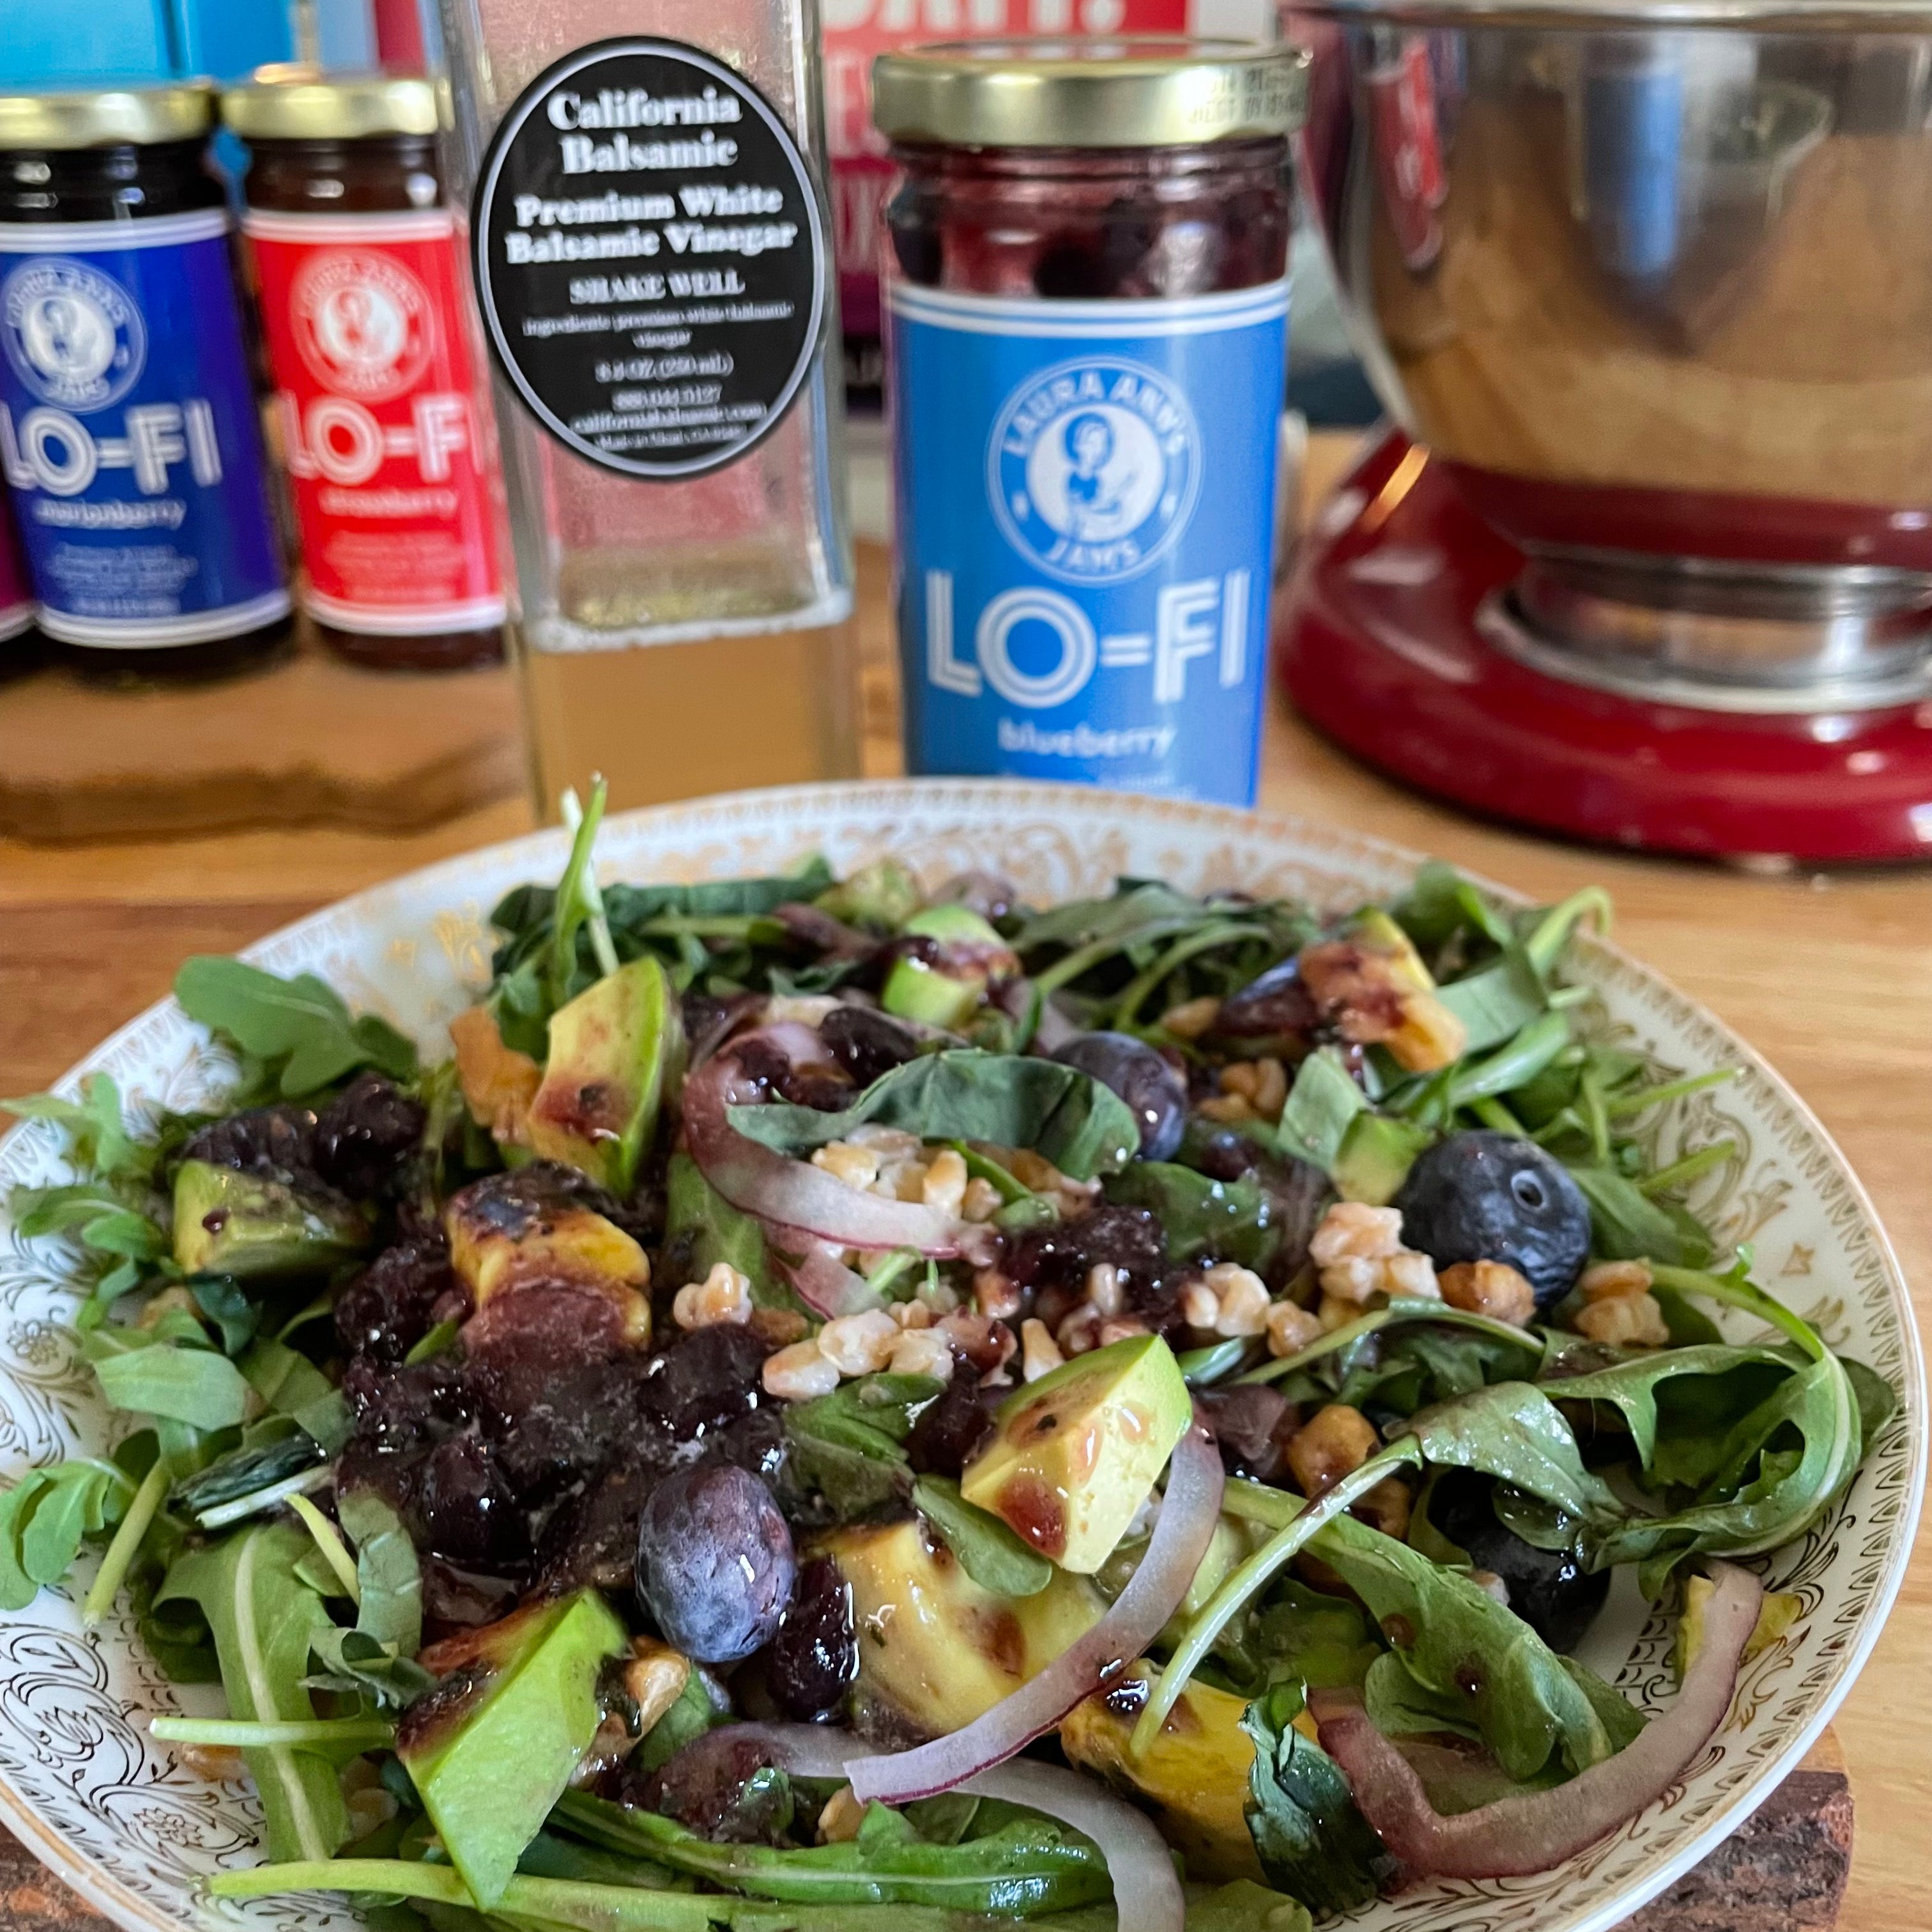 LO-FI Blueberry Salad Dressing